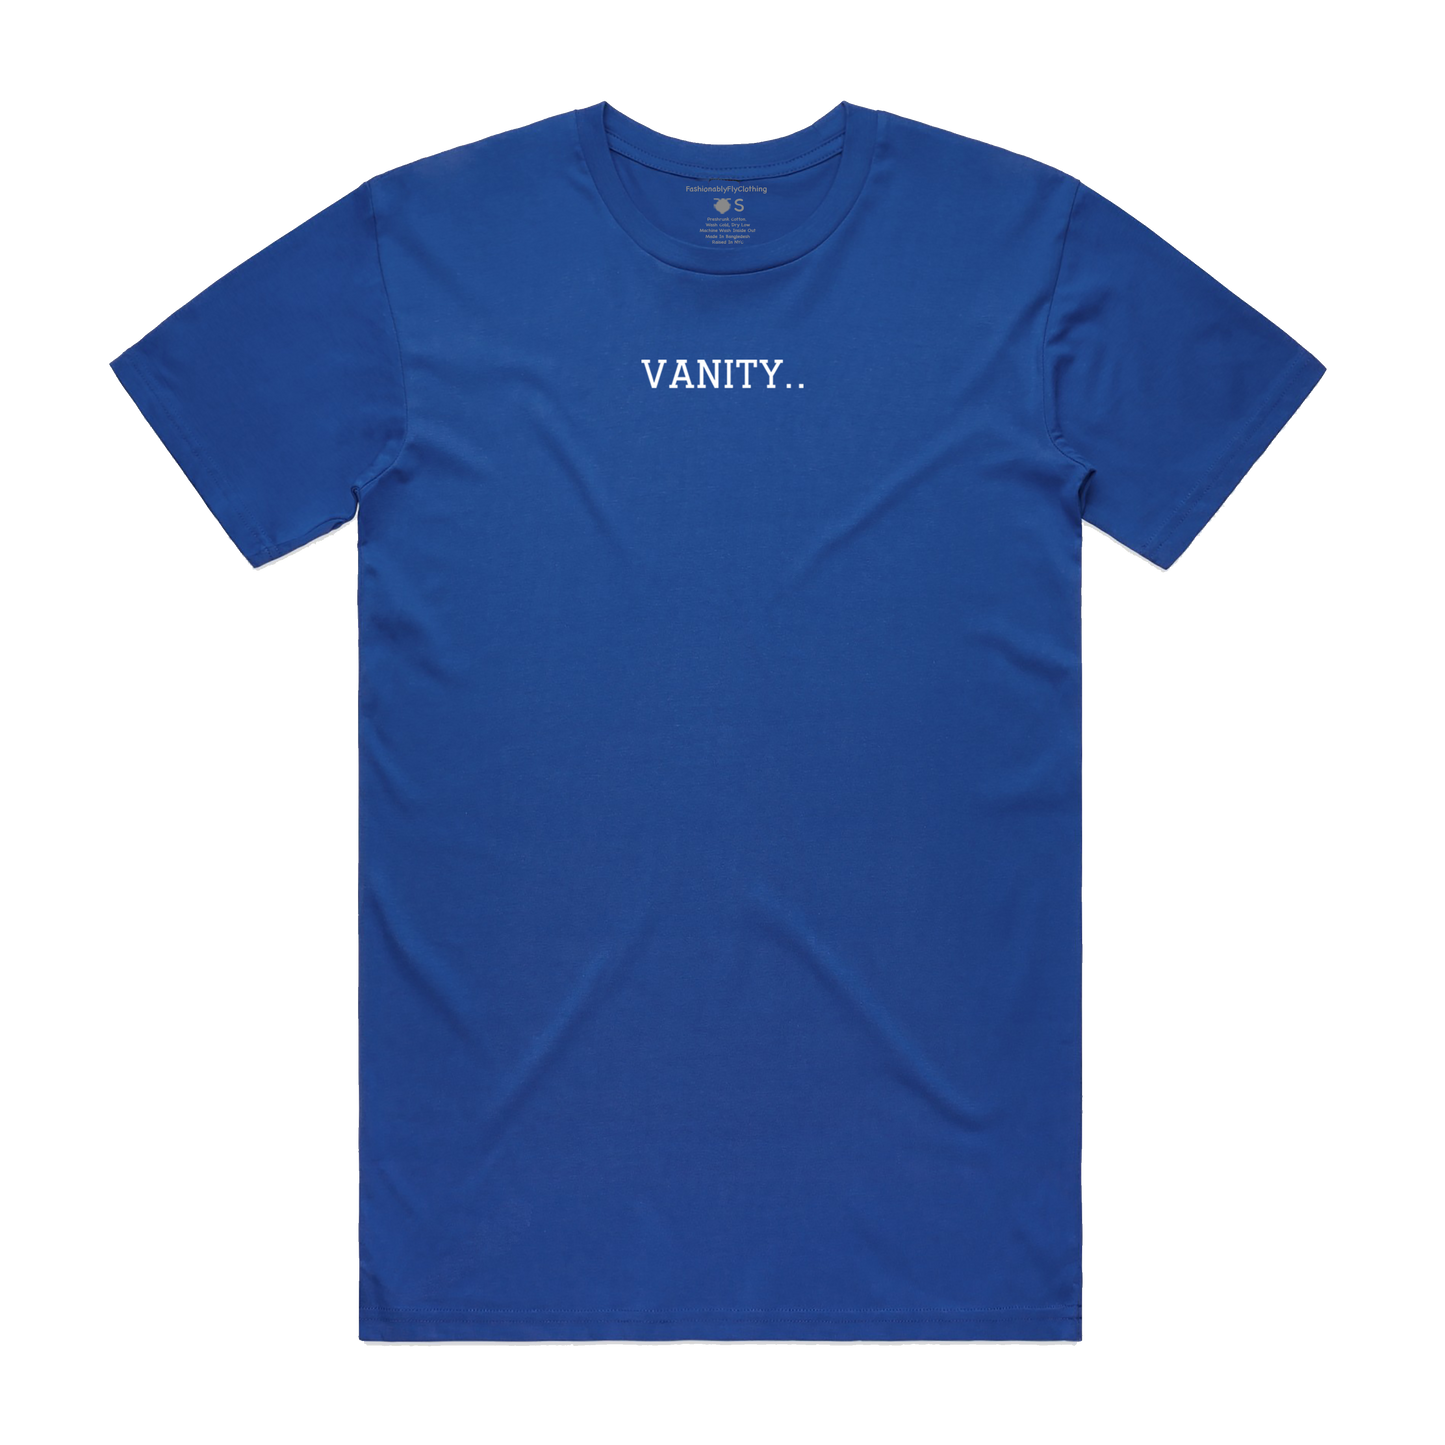 Vanity.. Unisex T-Shirt - Royal Blue